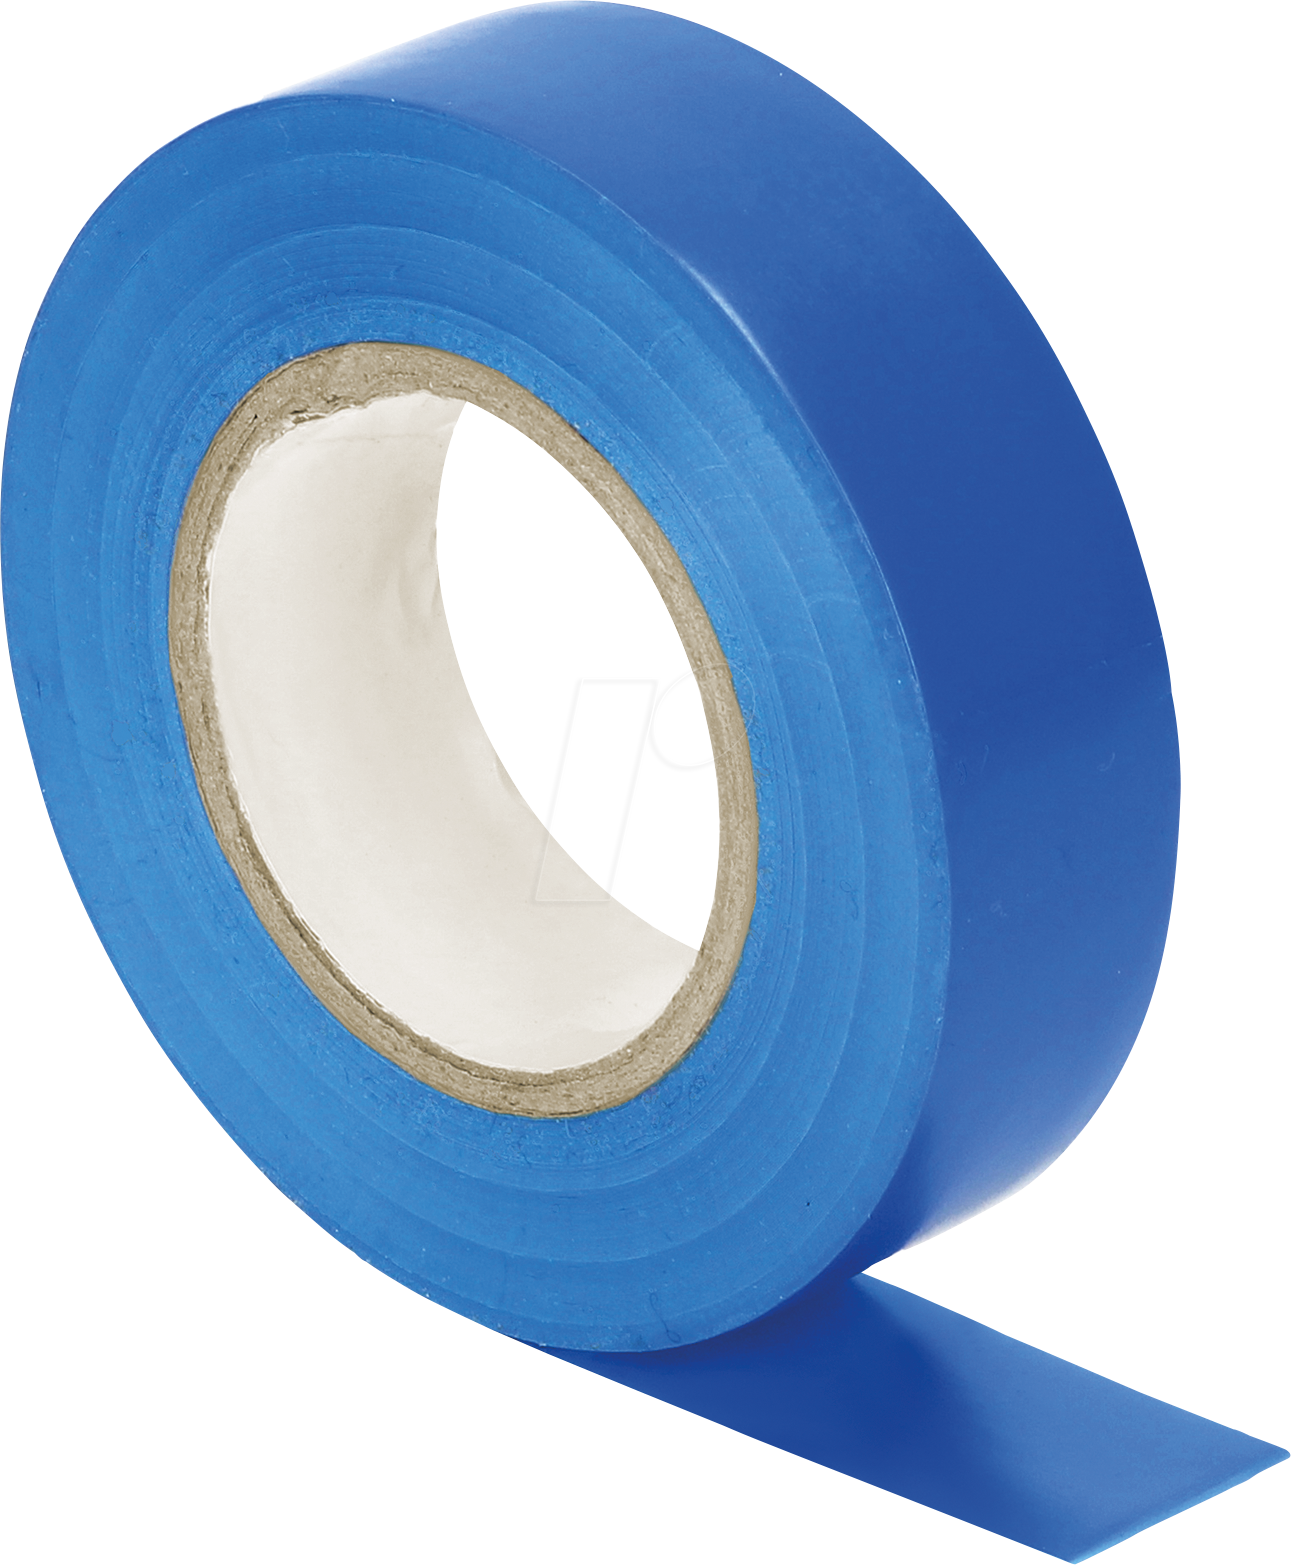 ORNO OR-AE-BL - Isolierband 19mm breit, 0,13 mm dick, 20m lang blau von ORNO